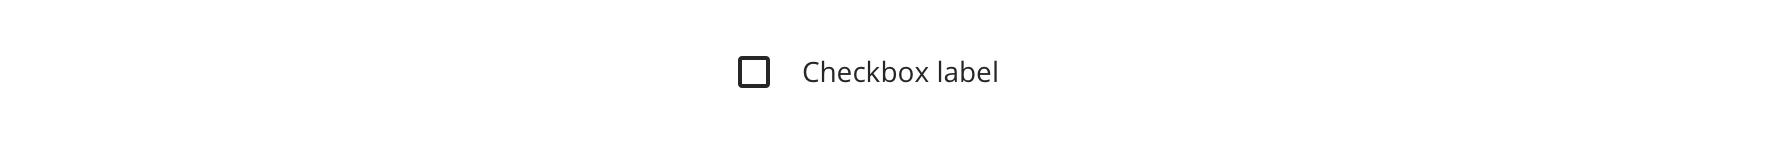 Default checkbox